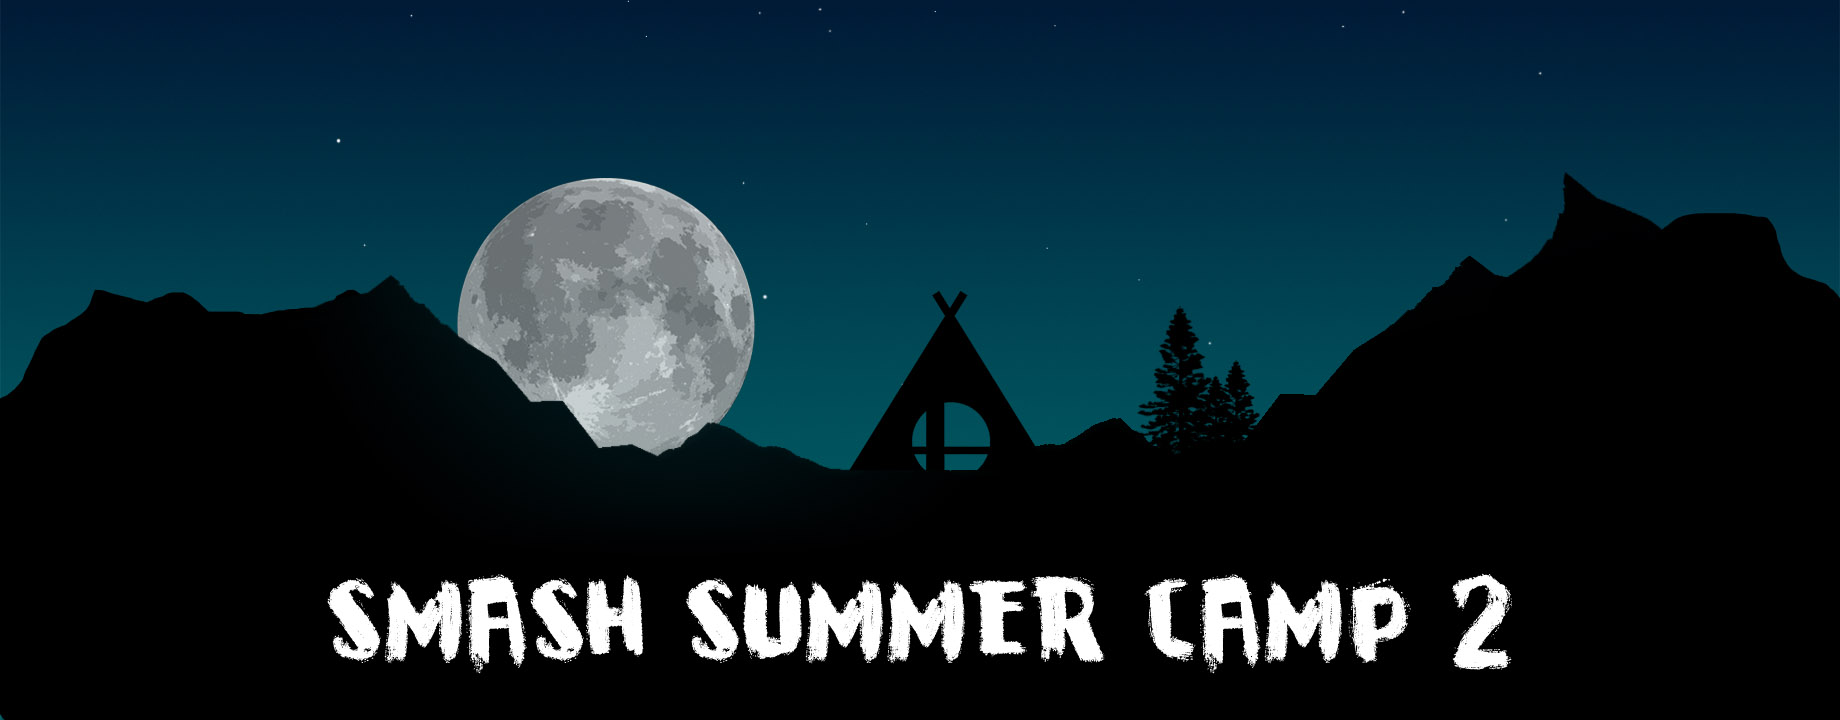 Smash Summer Camp 2 Tournament